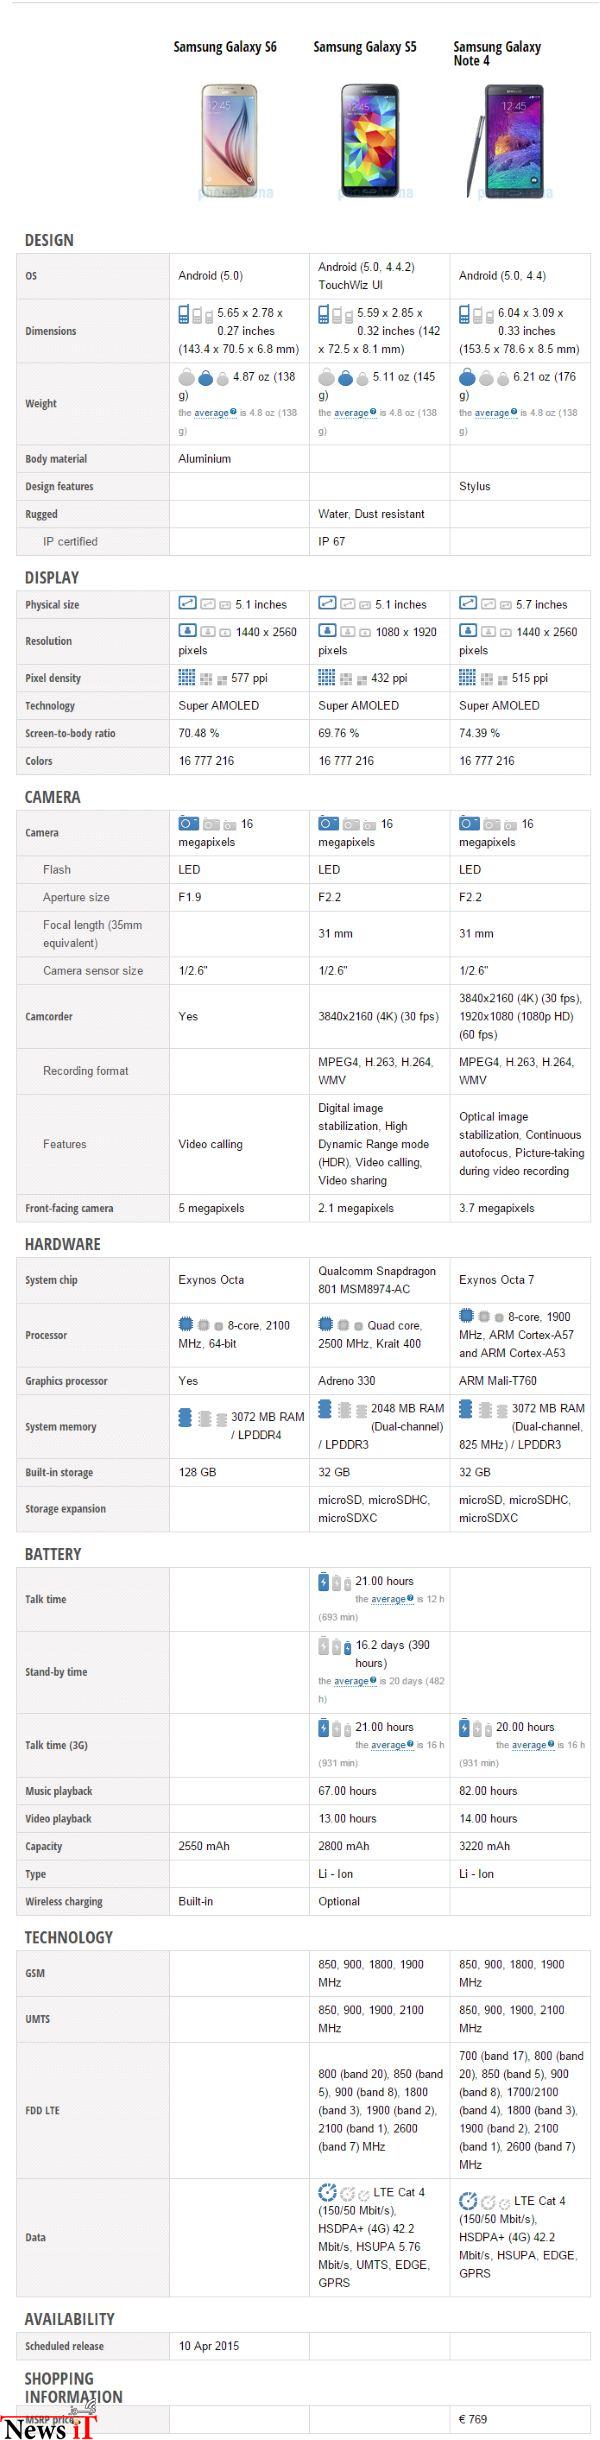 Samsung Galaxy S6 vs Galaxy S5 vs Galaxy Note 4  specs comparison